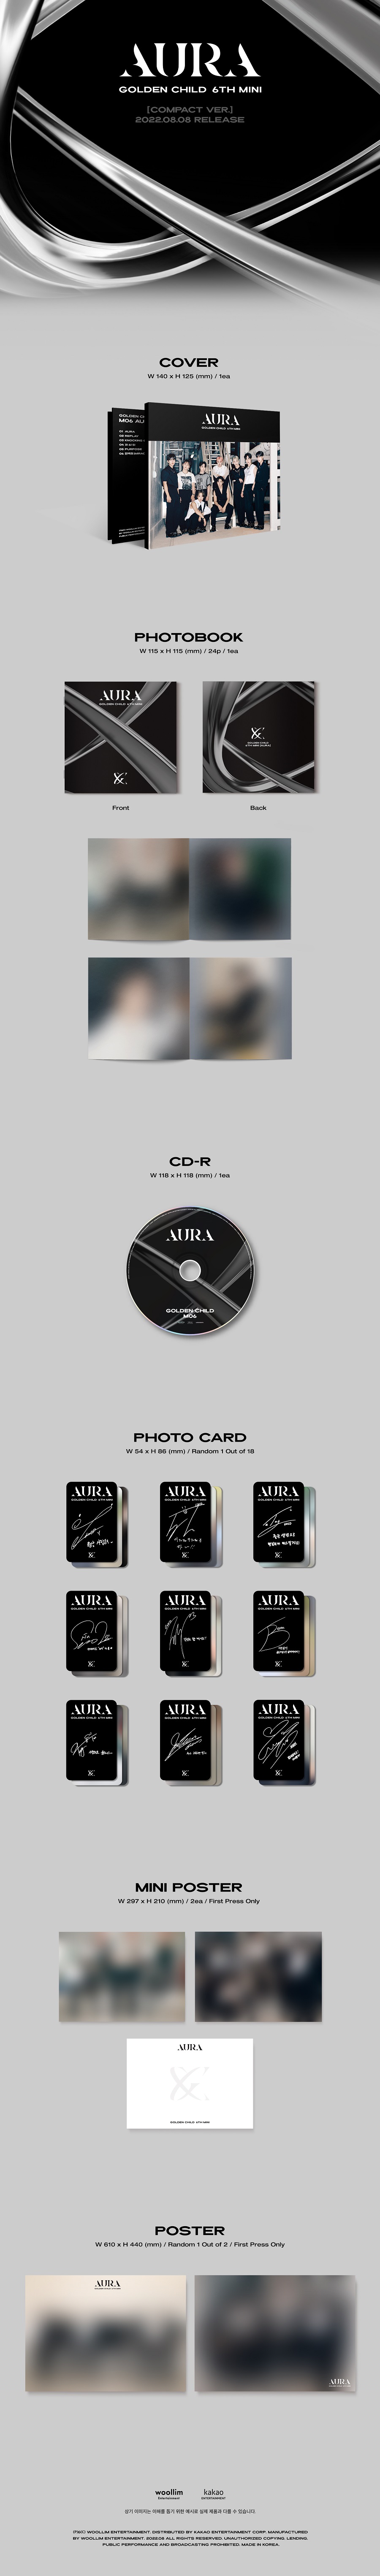 GOLDEN CHILD(골든차일드) - 미니 6집 [AURA] Compact ver. (*Limited Edition)